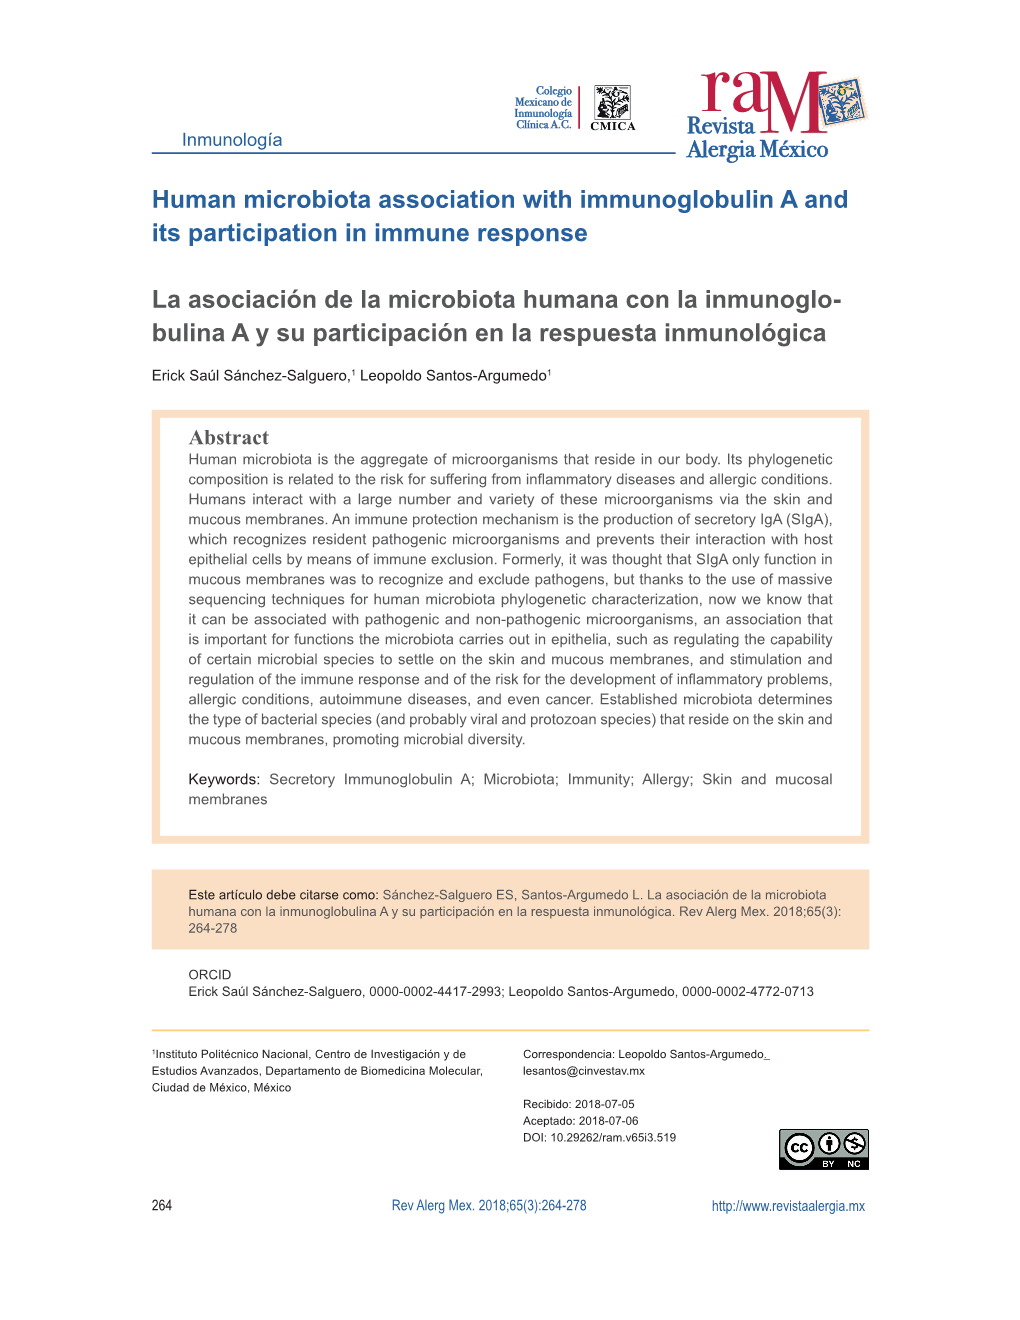 Human Microbiota Association with Immunoglobulin a and Its Participation in Immune Response La Asociación De La Microbiota Huma